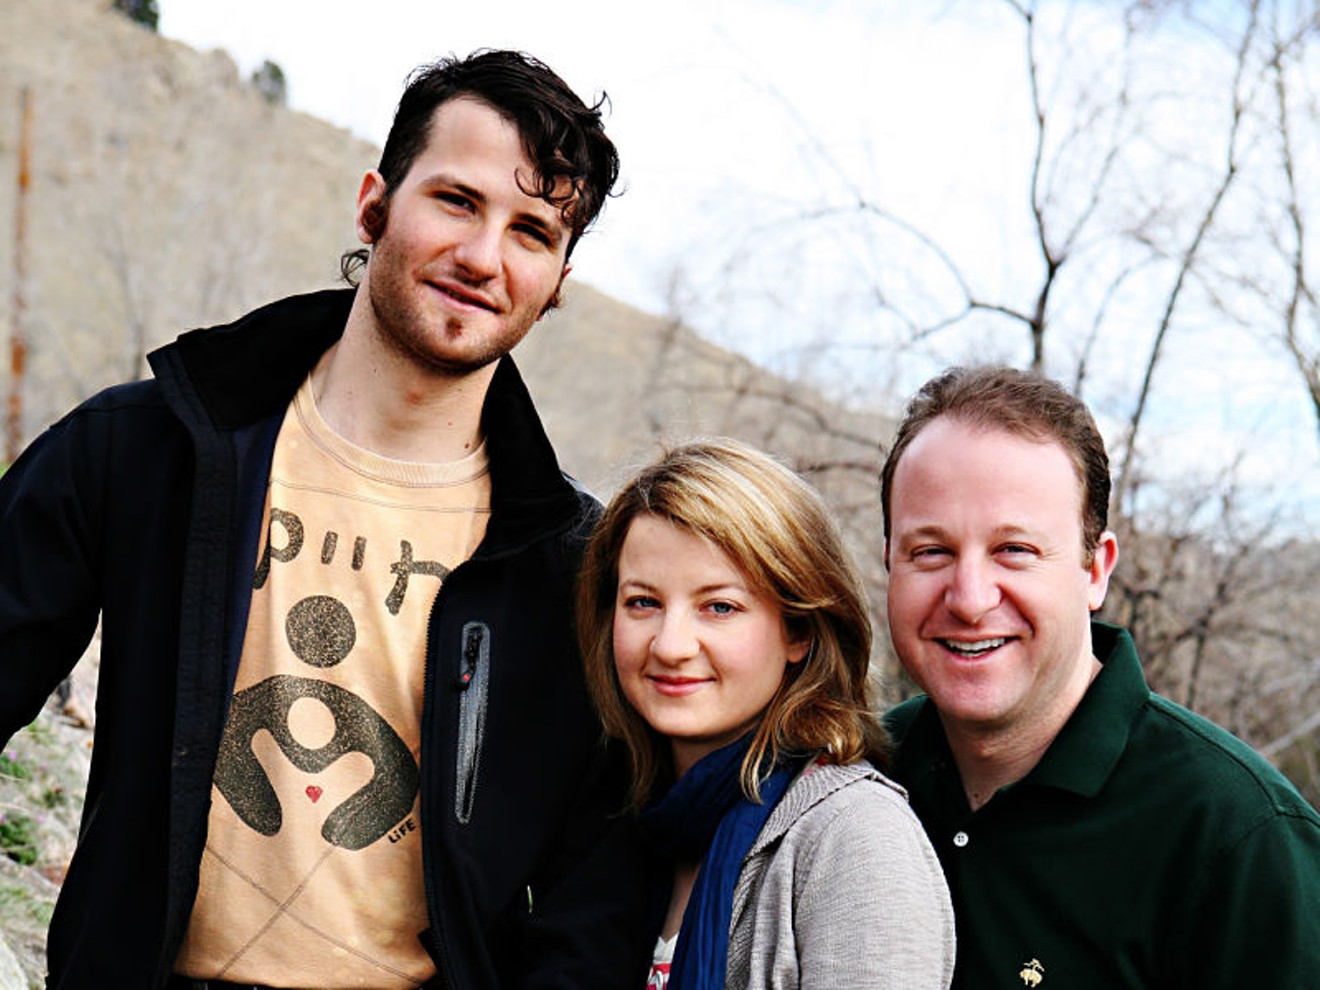 Jorian, Jordanna and Jared in Boulder in 2010.